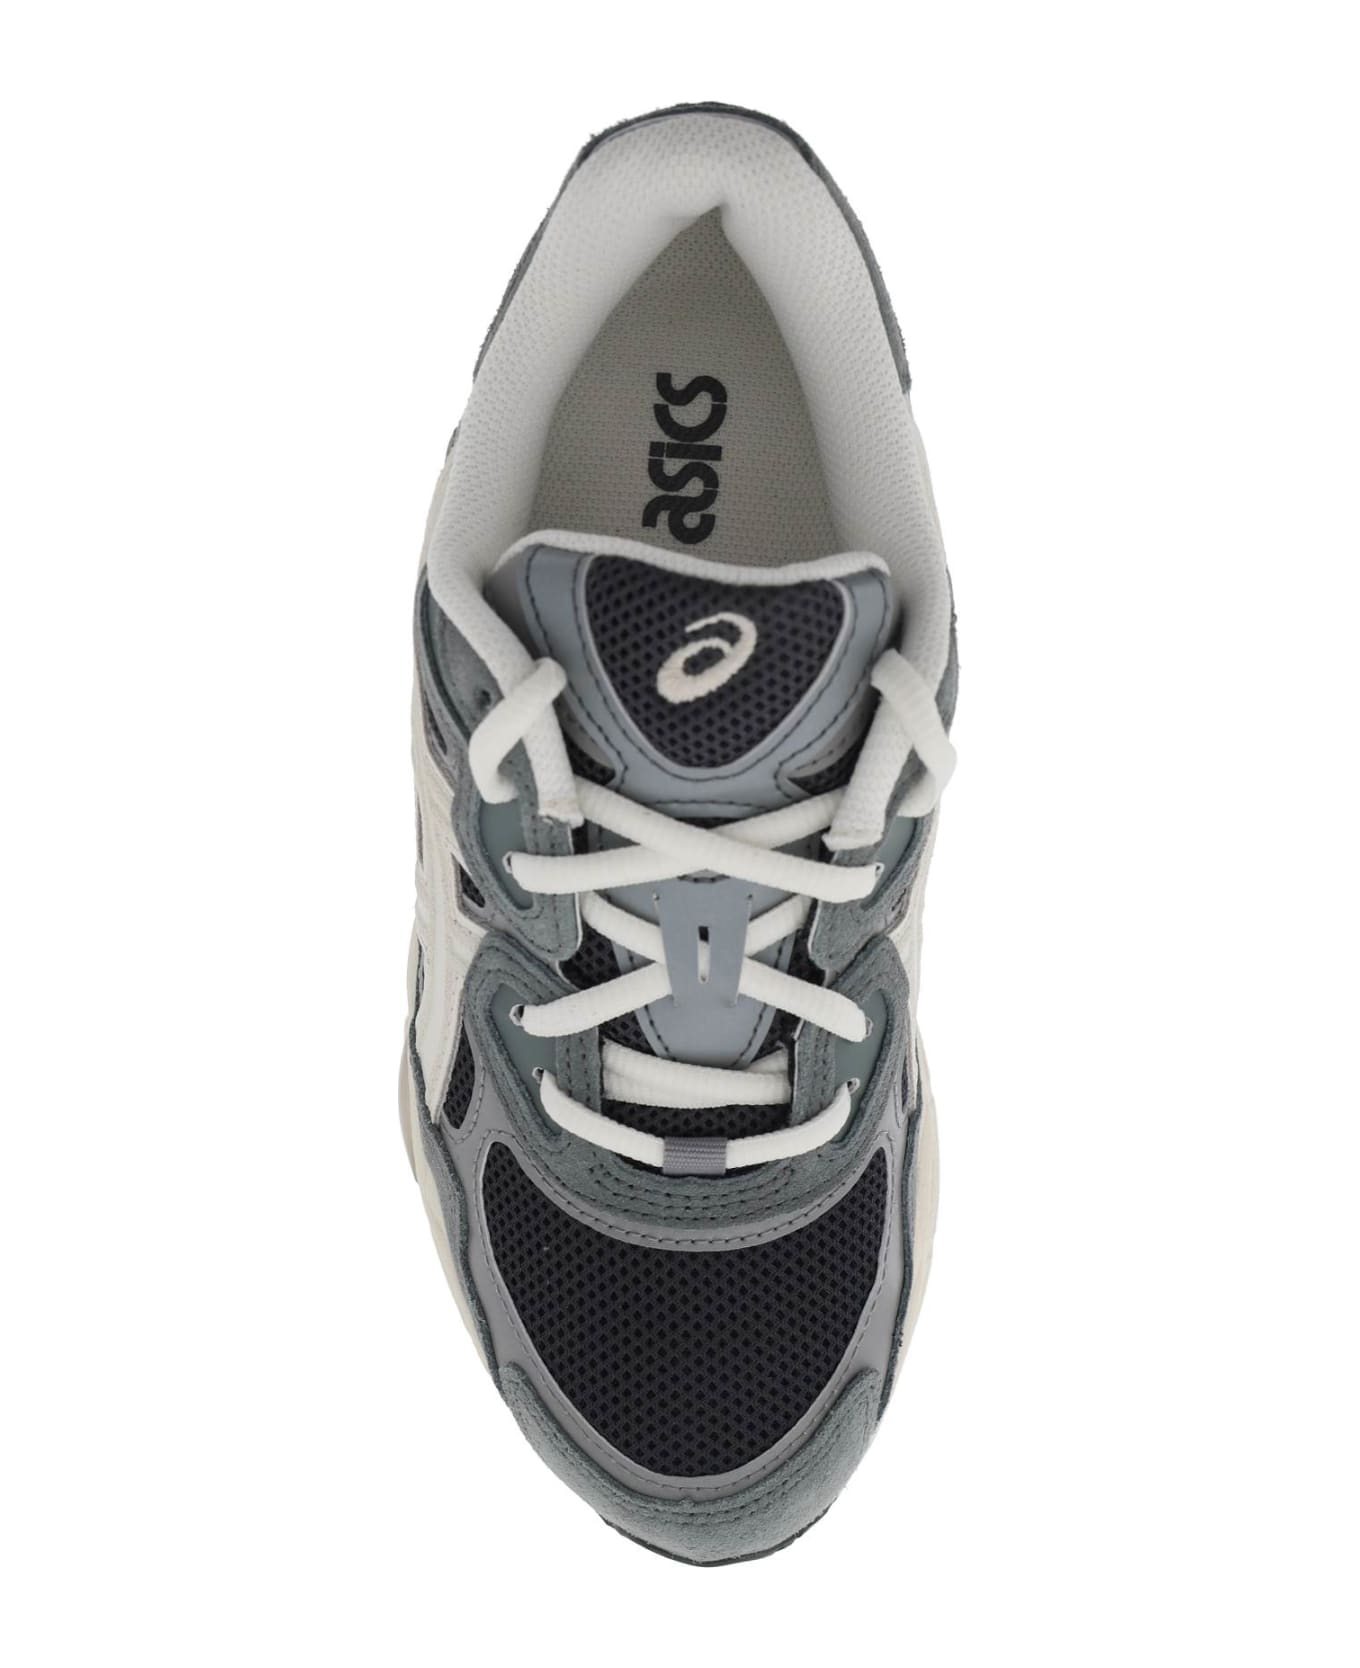 Asics Gel-nyc Sneakers - GRAPHITE GREY SMOKE GREY (Black) スニーカー